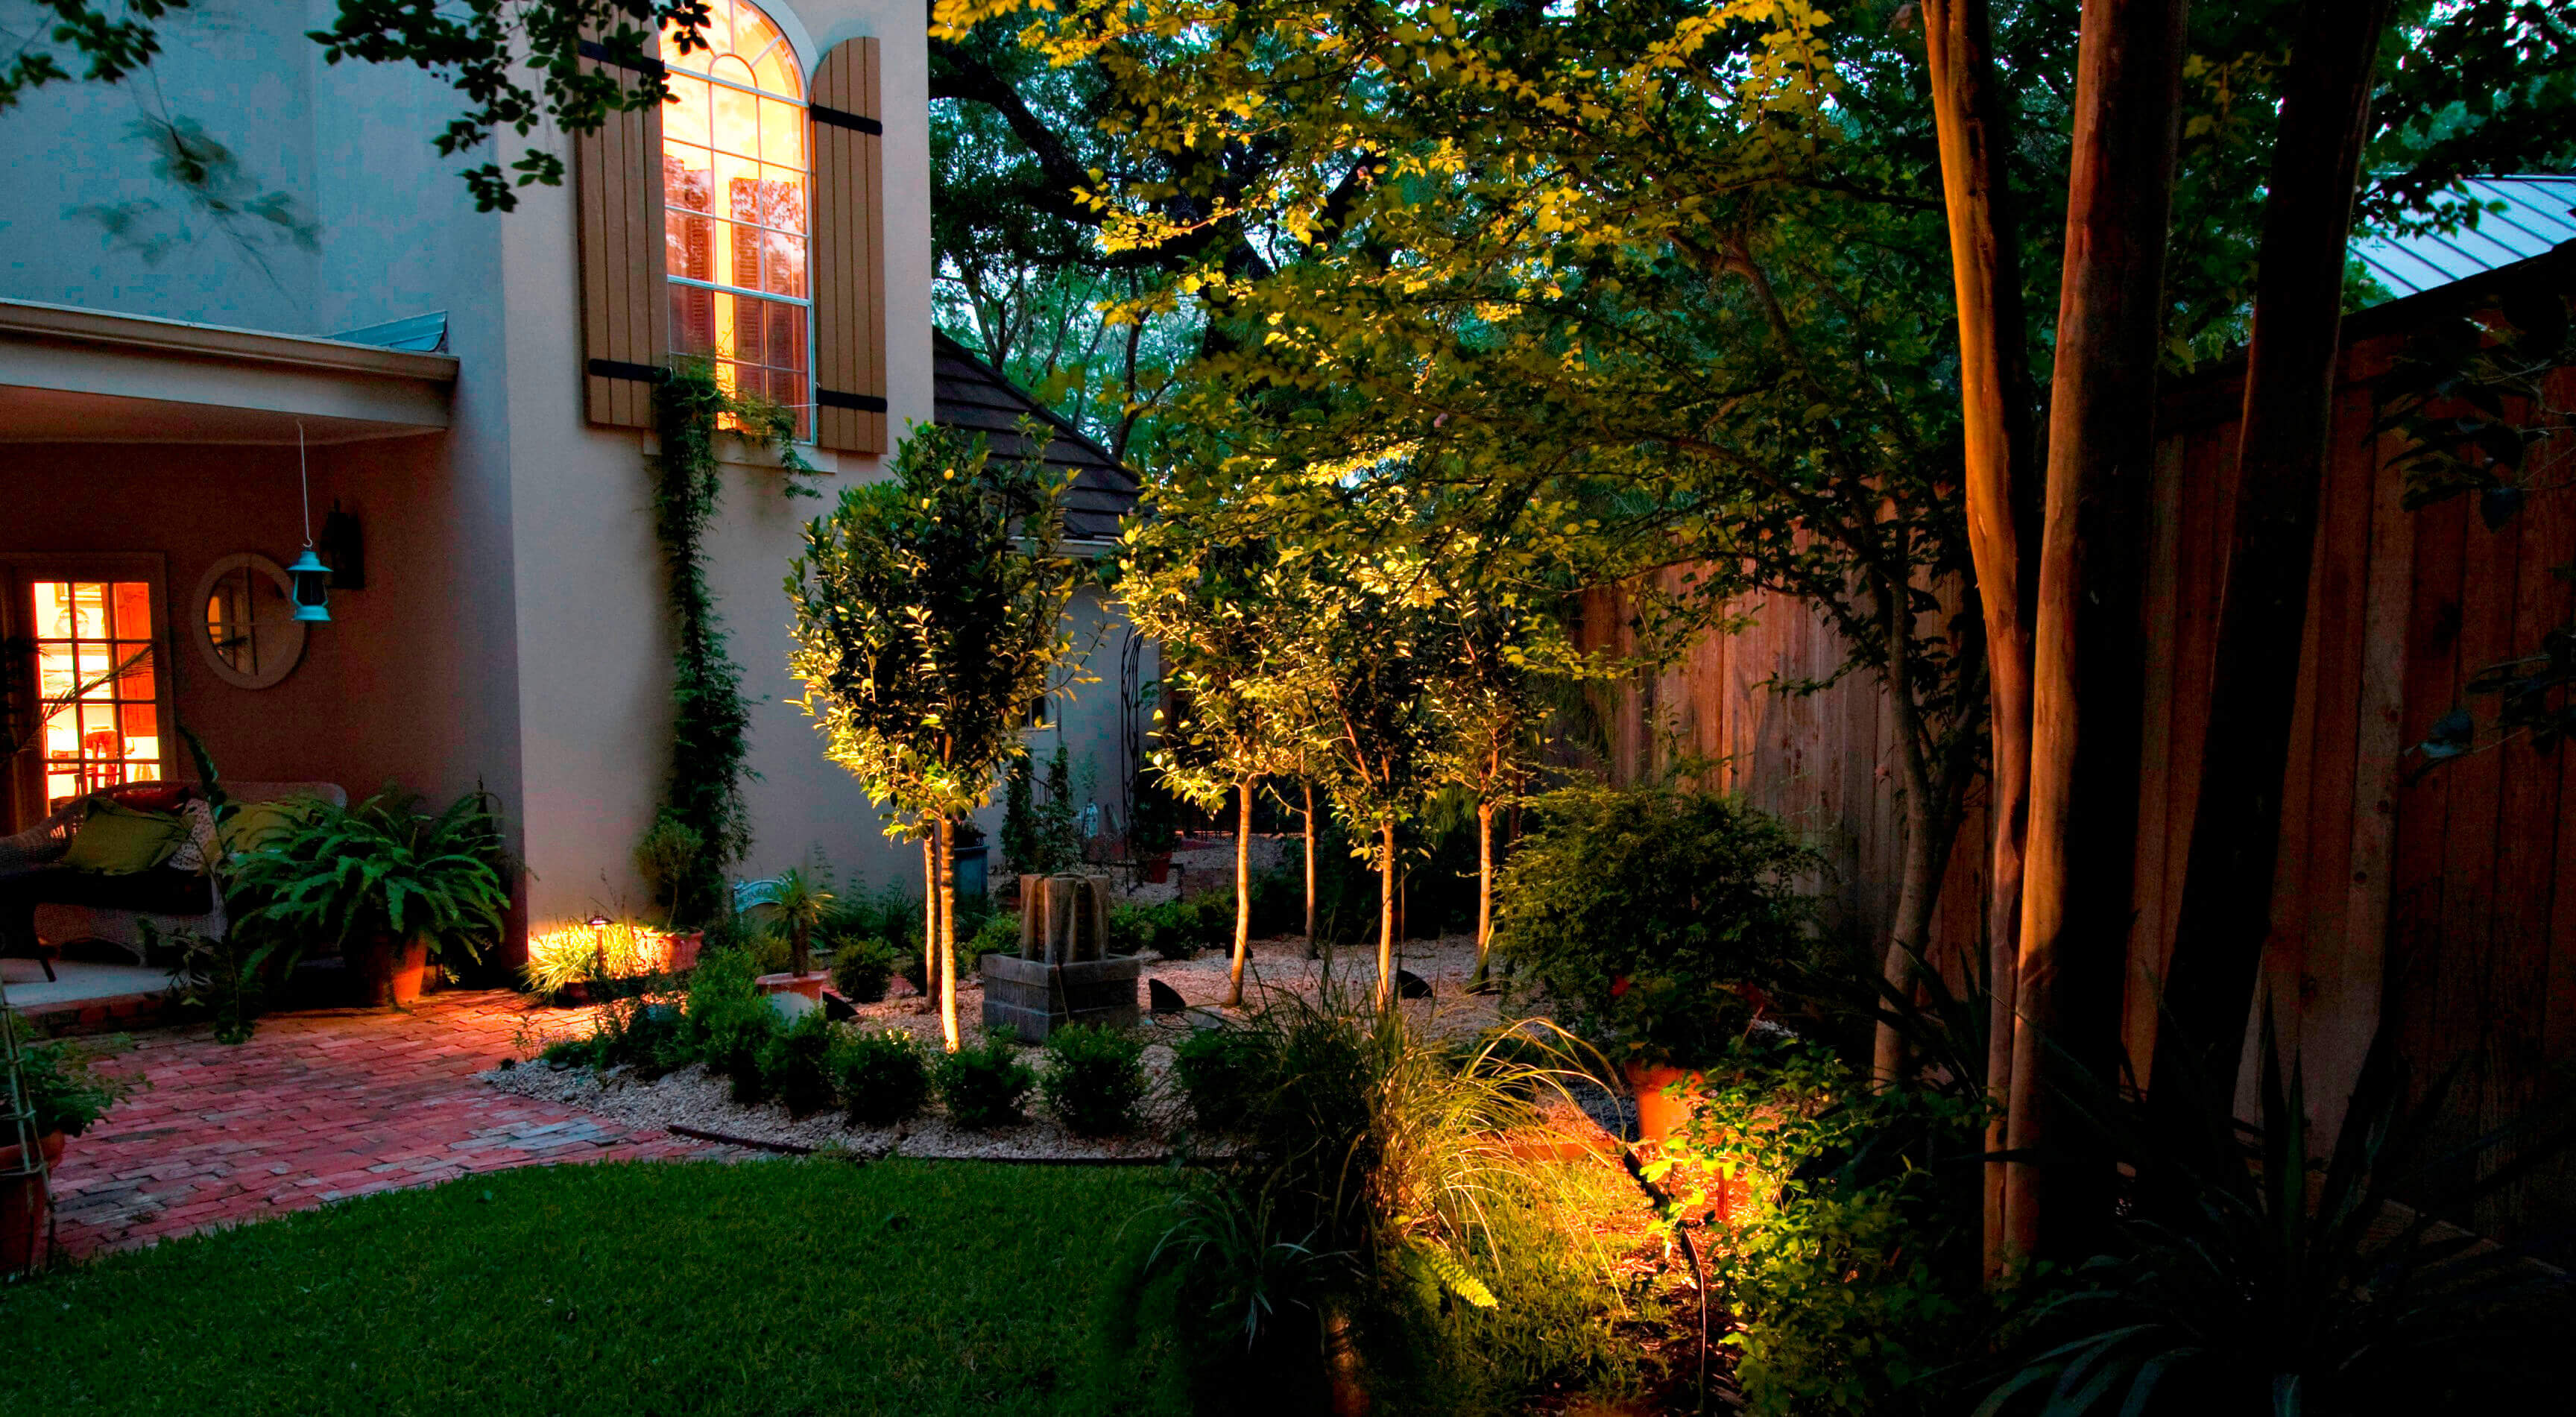 Backyard garden and patio with lighting